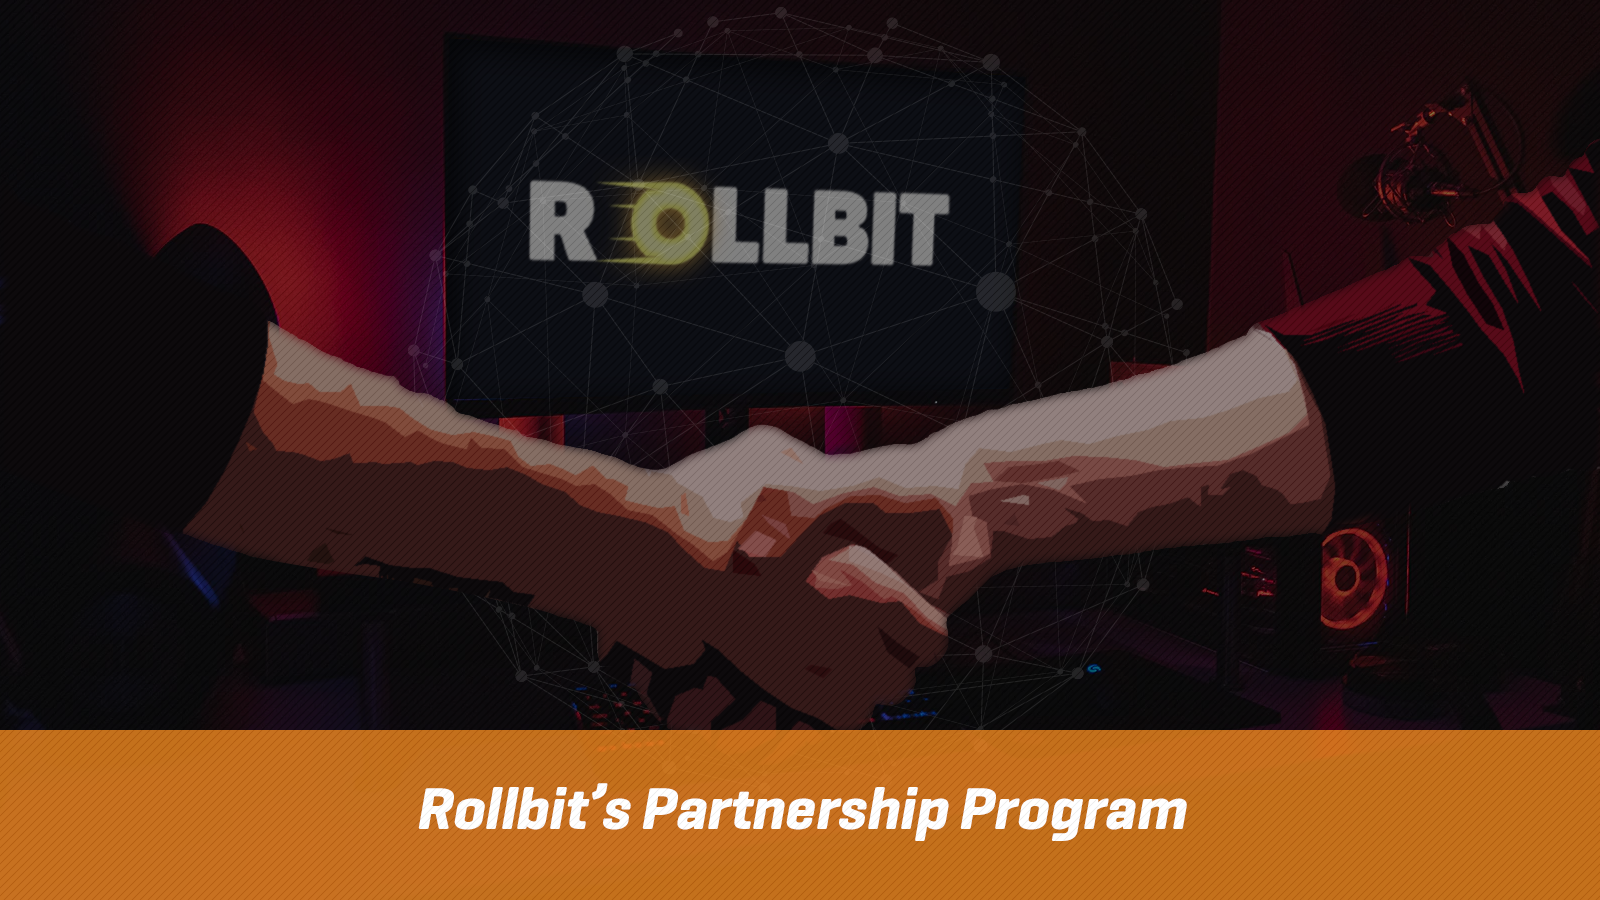 Introducing Rollbit’s Partnership Program